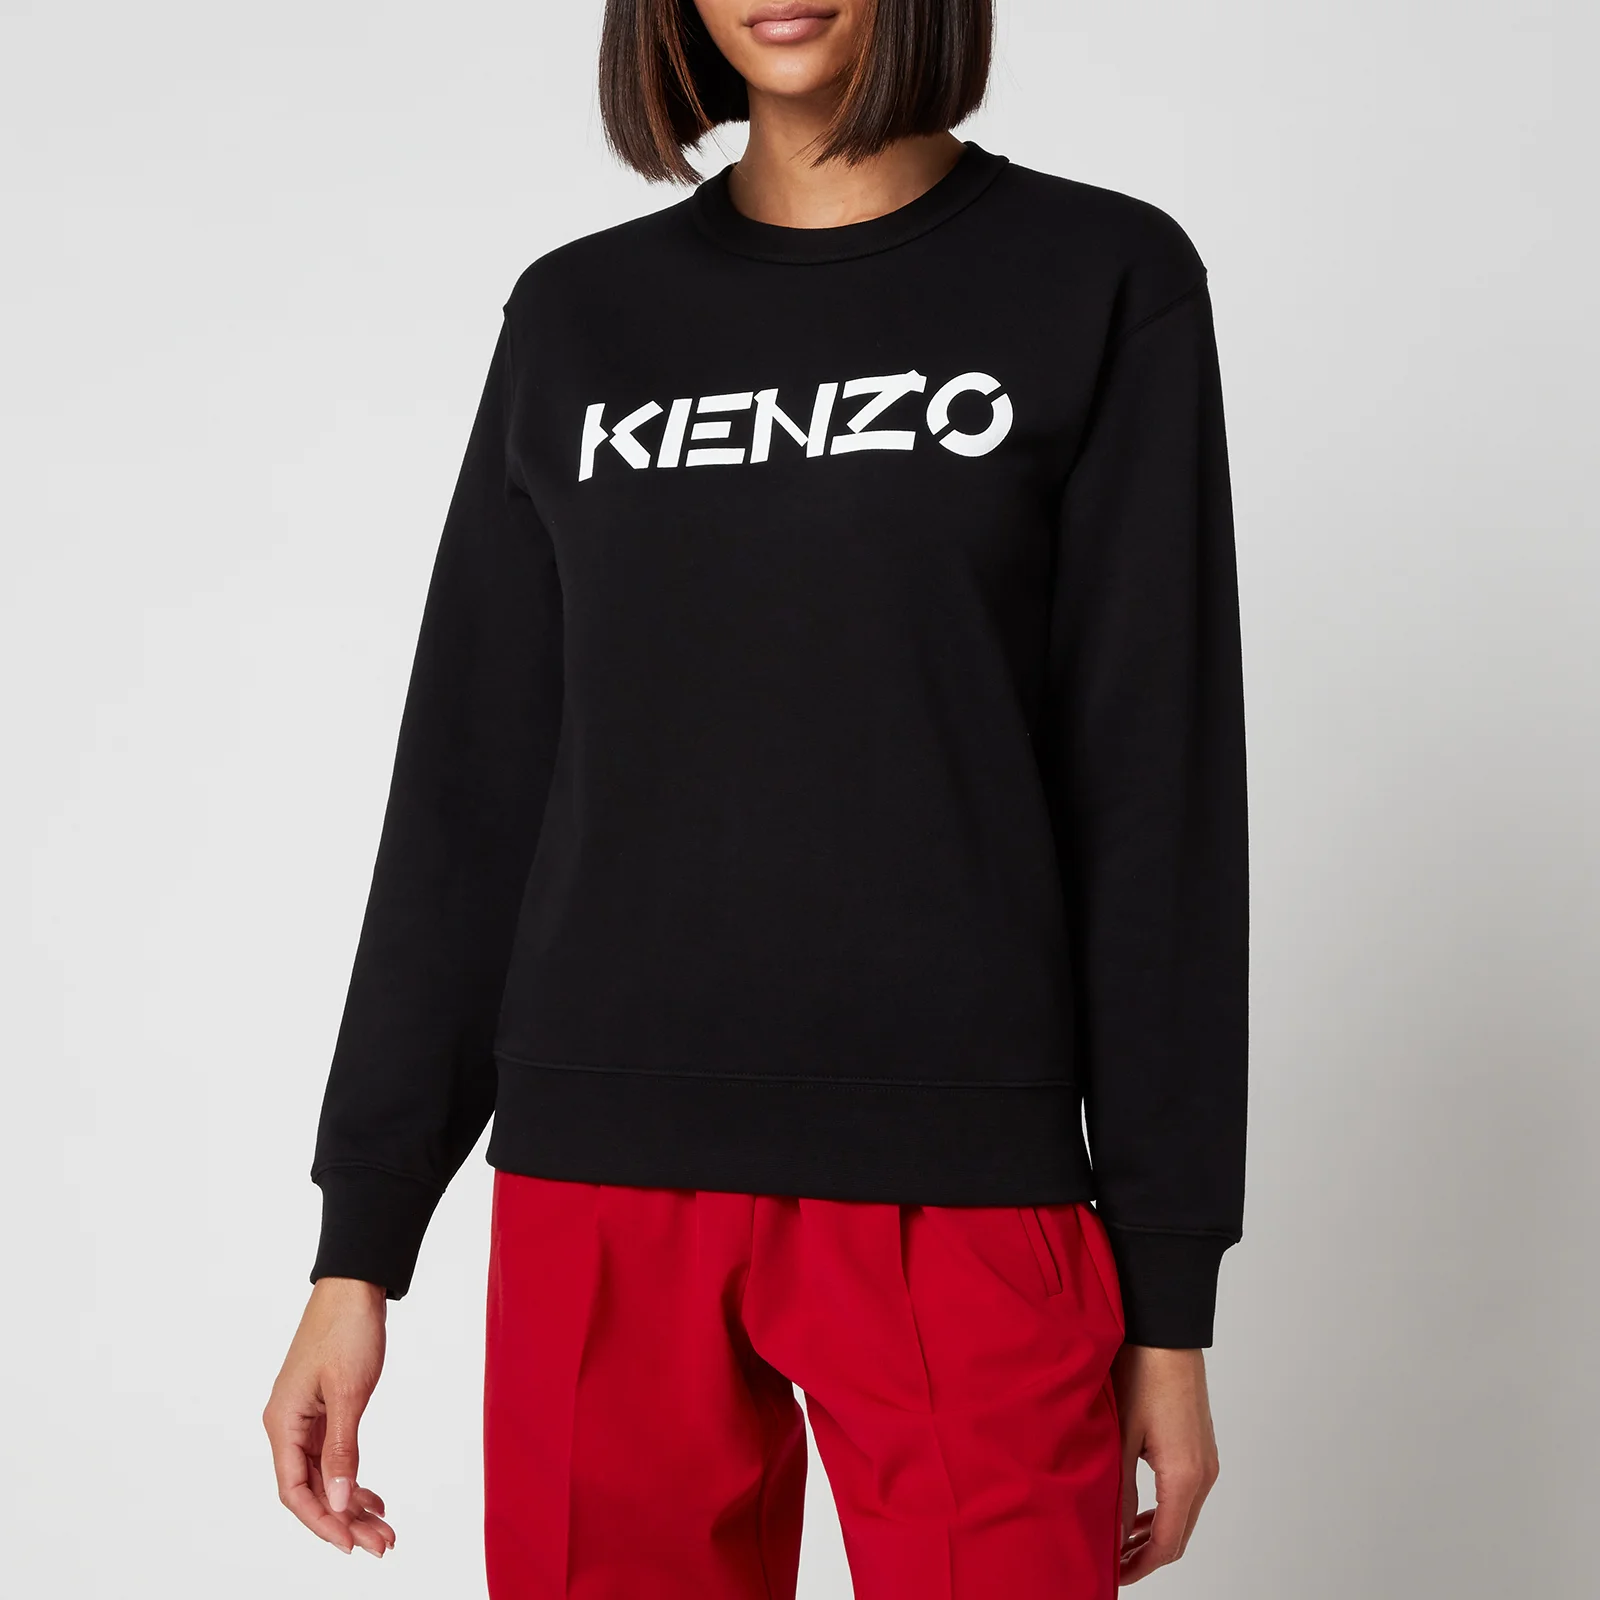 KENZO Women's Classic Fit Sweatshirt KENZO Logo - Black Image 1